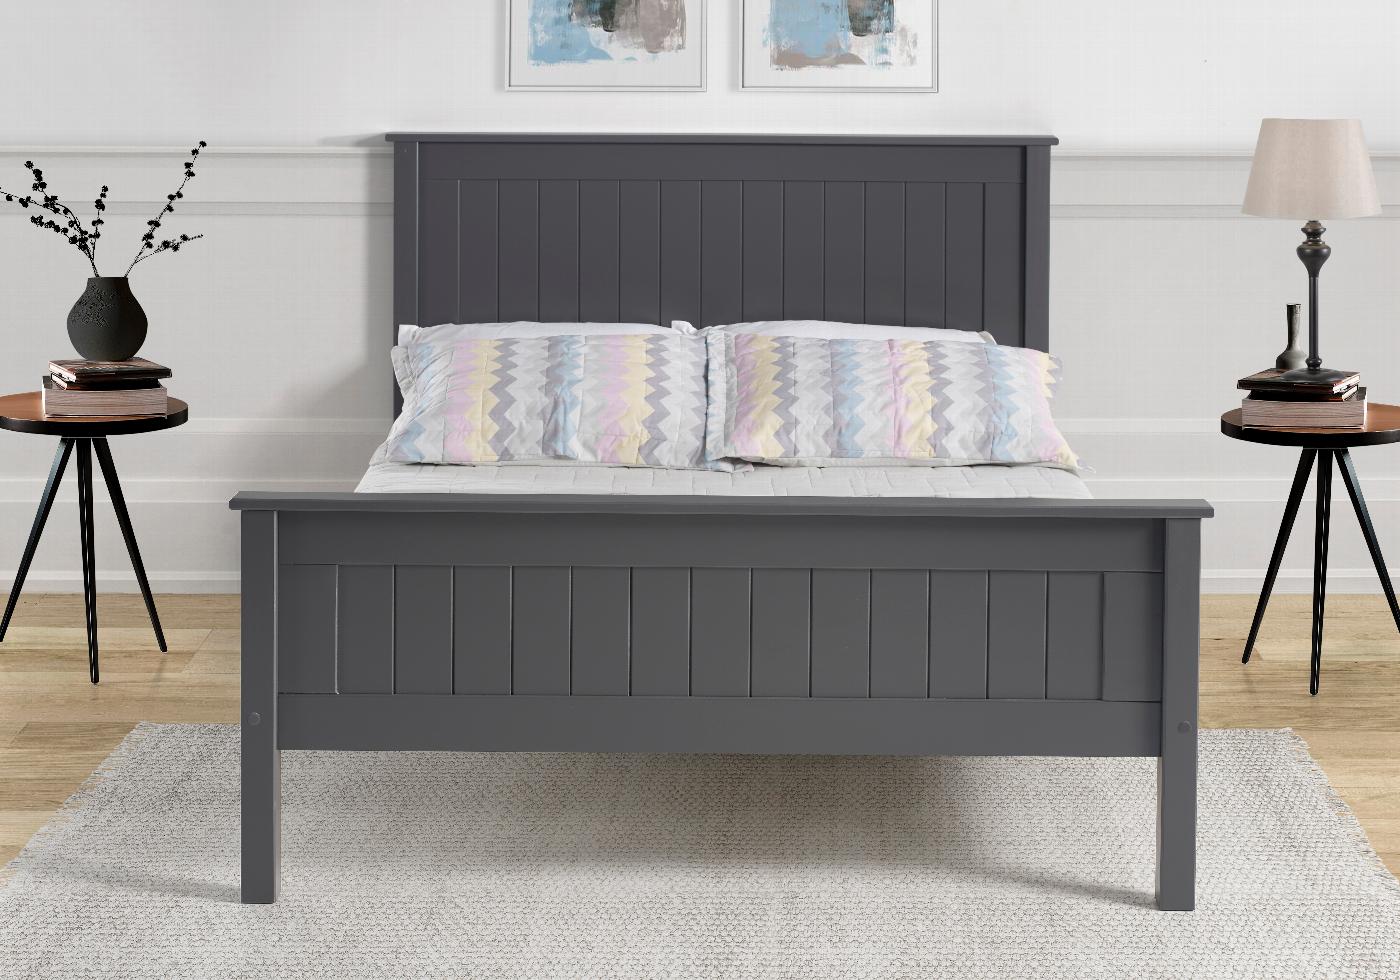 Taurus wooden bed frame